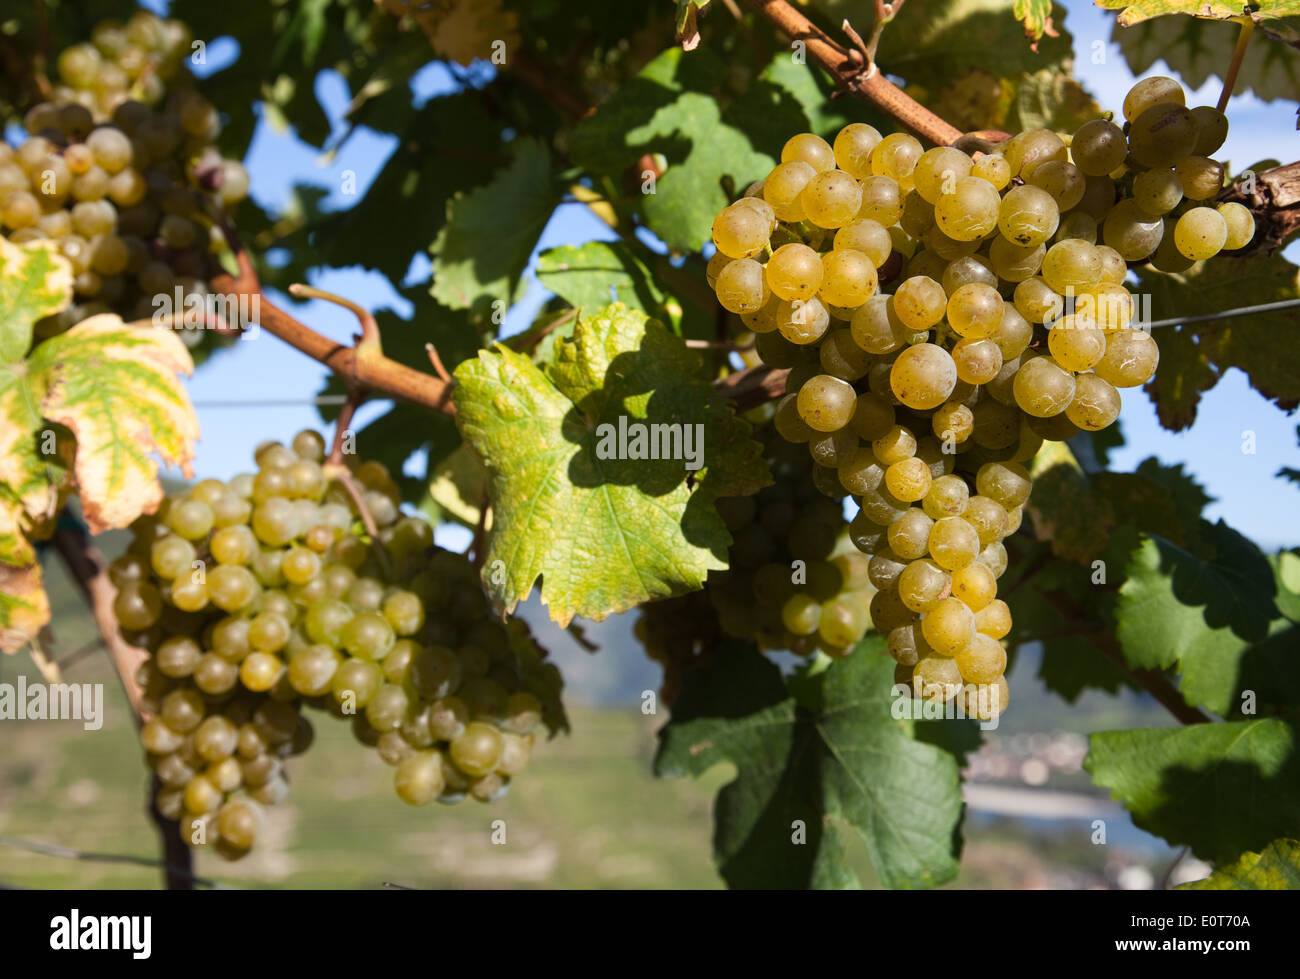 Weintrauben am Rebstock, Wachau - Grapes Stock Photo